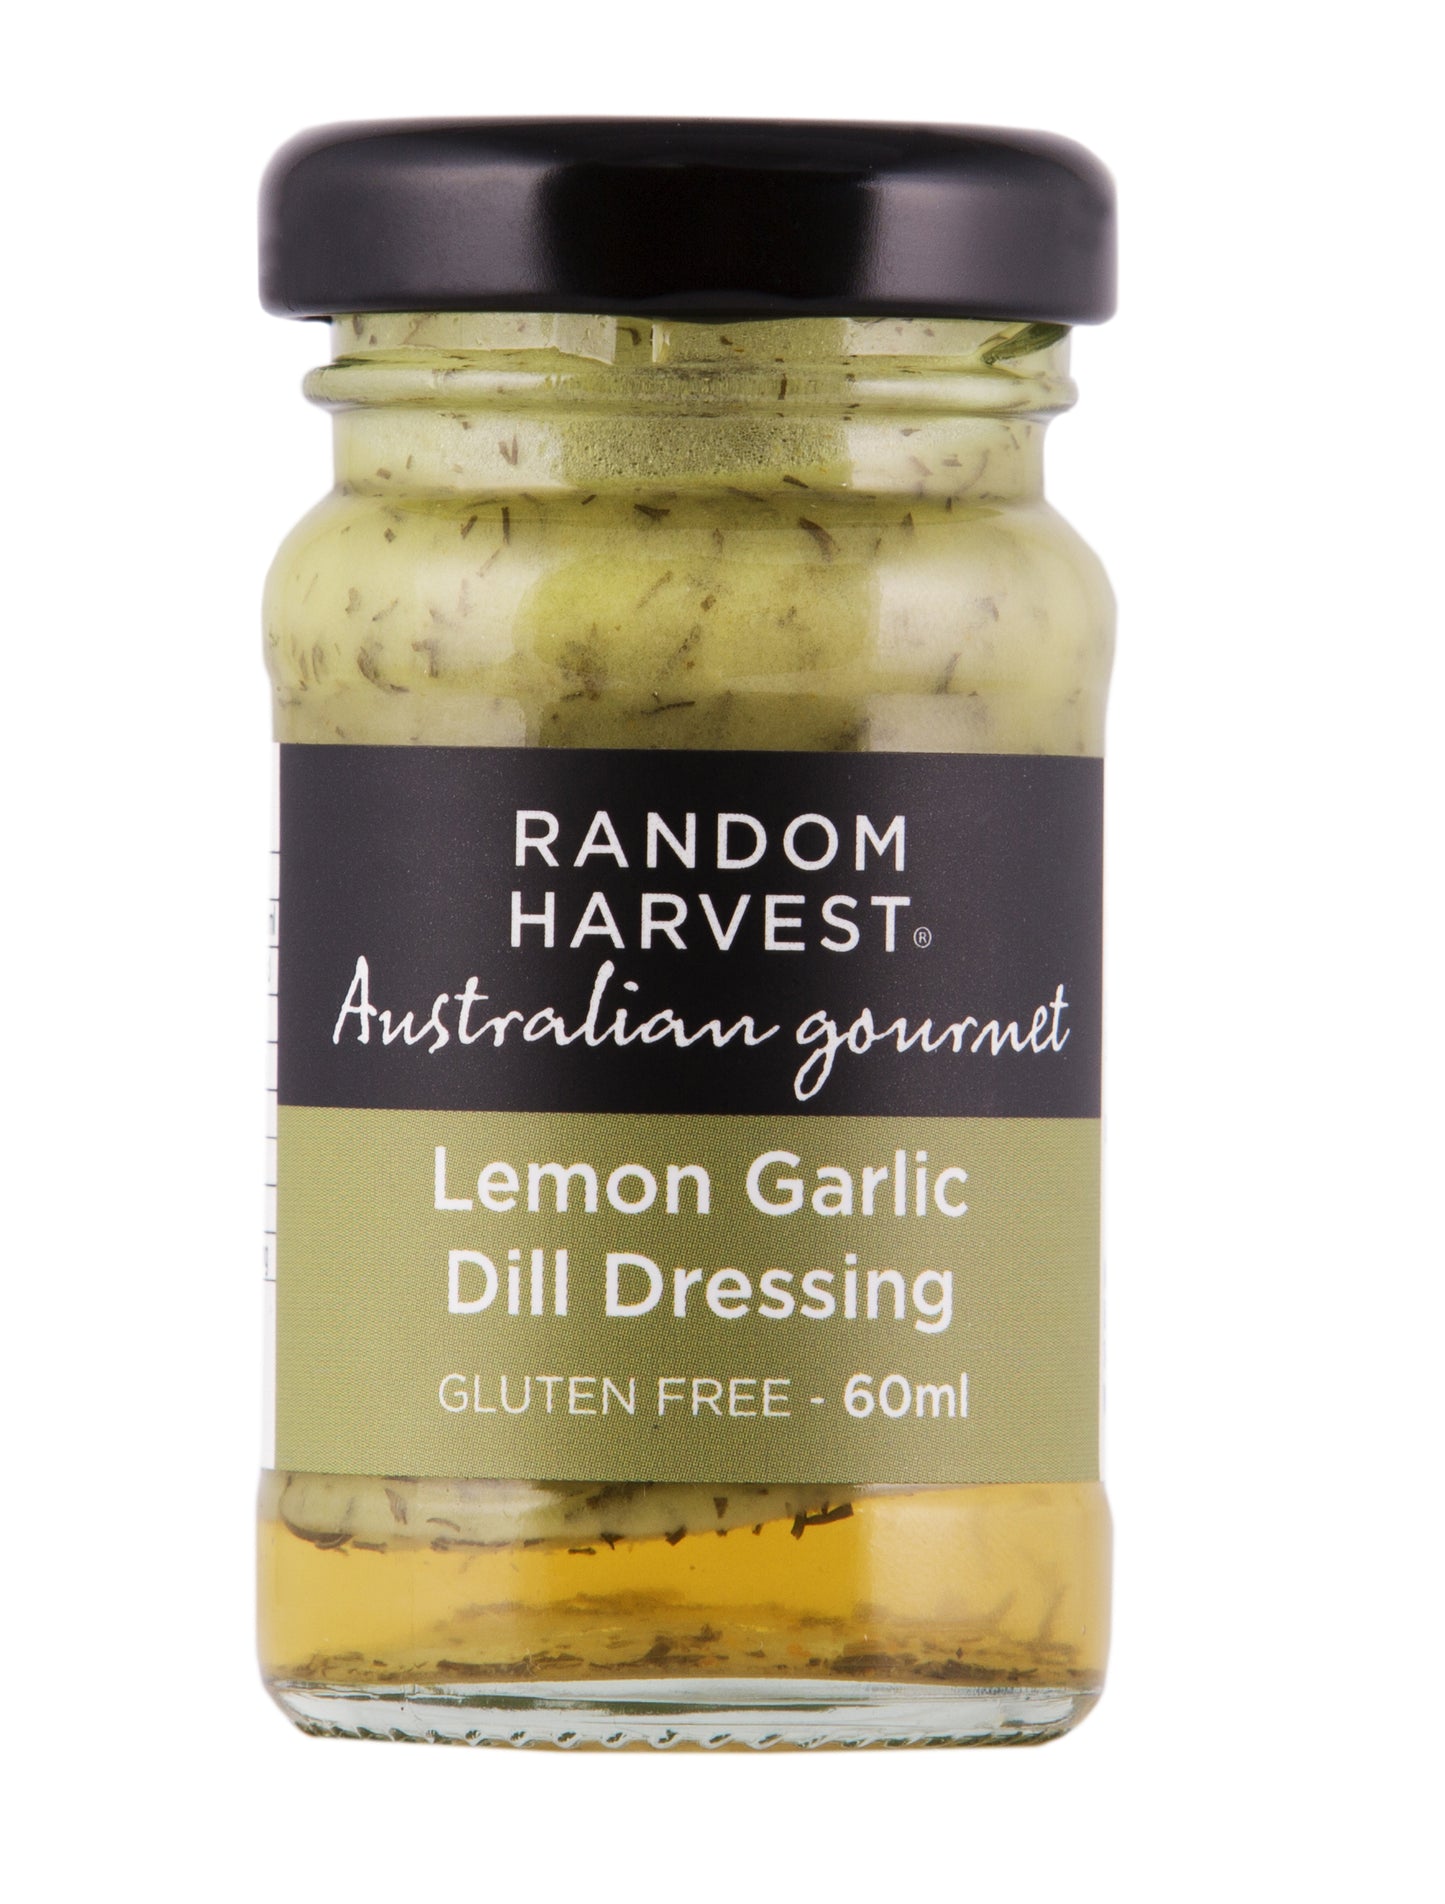 Lemon Garlic Dill Dressing